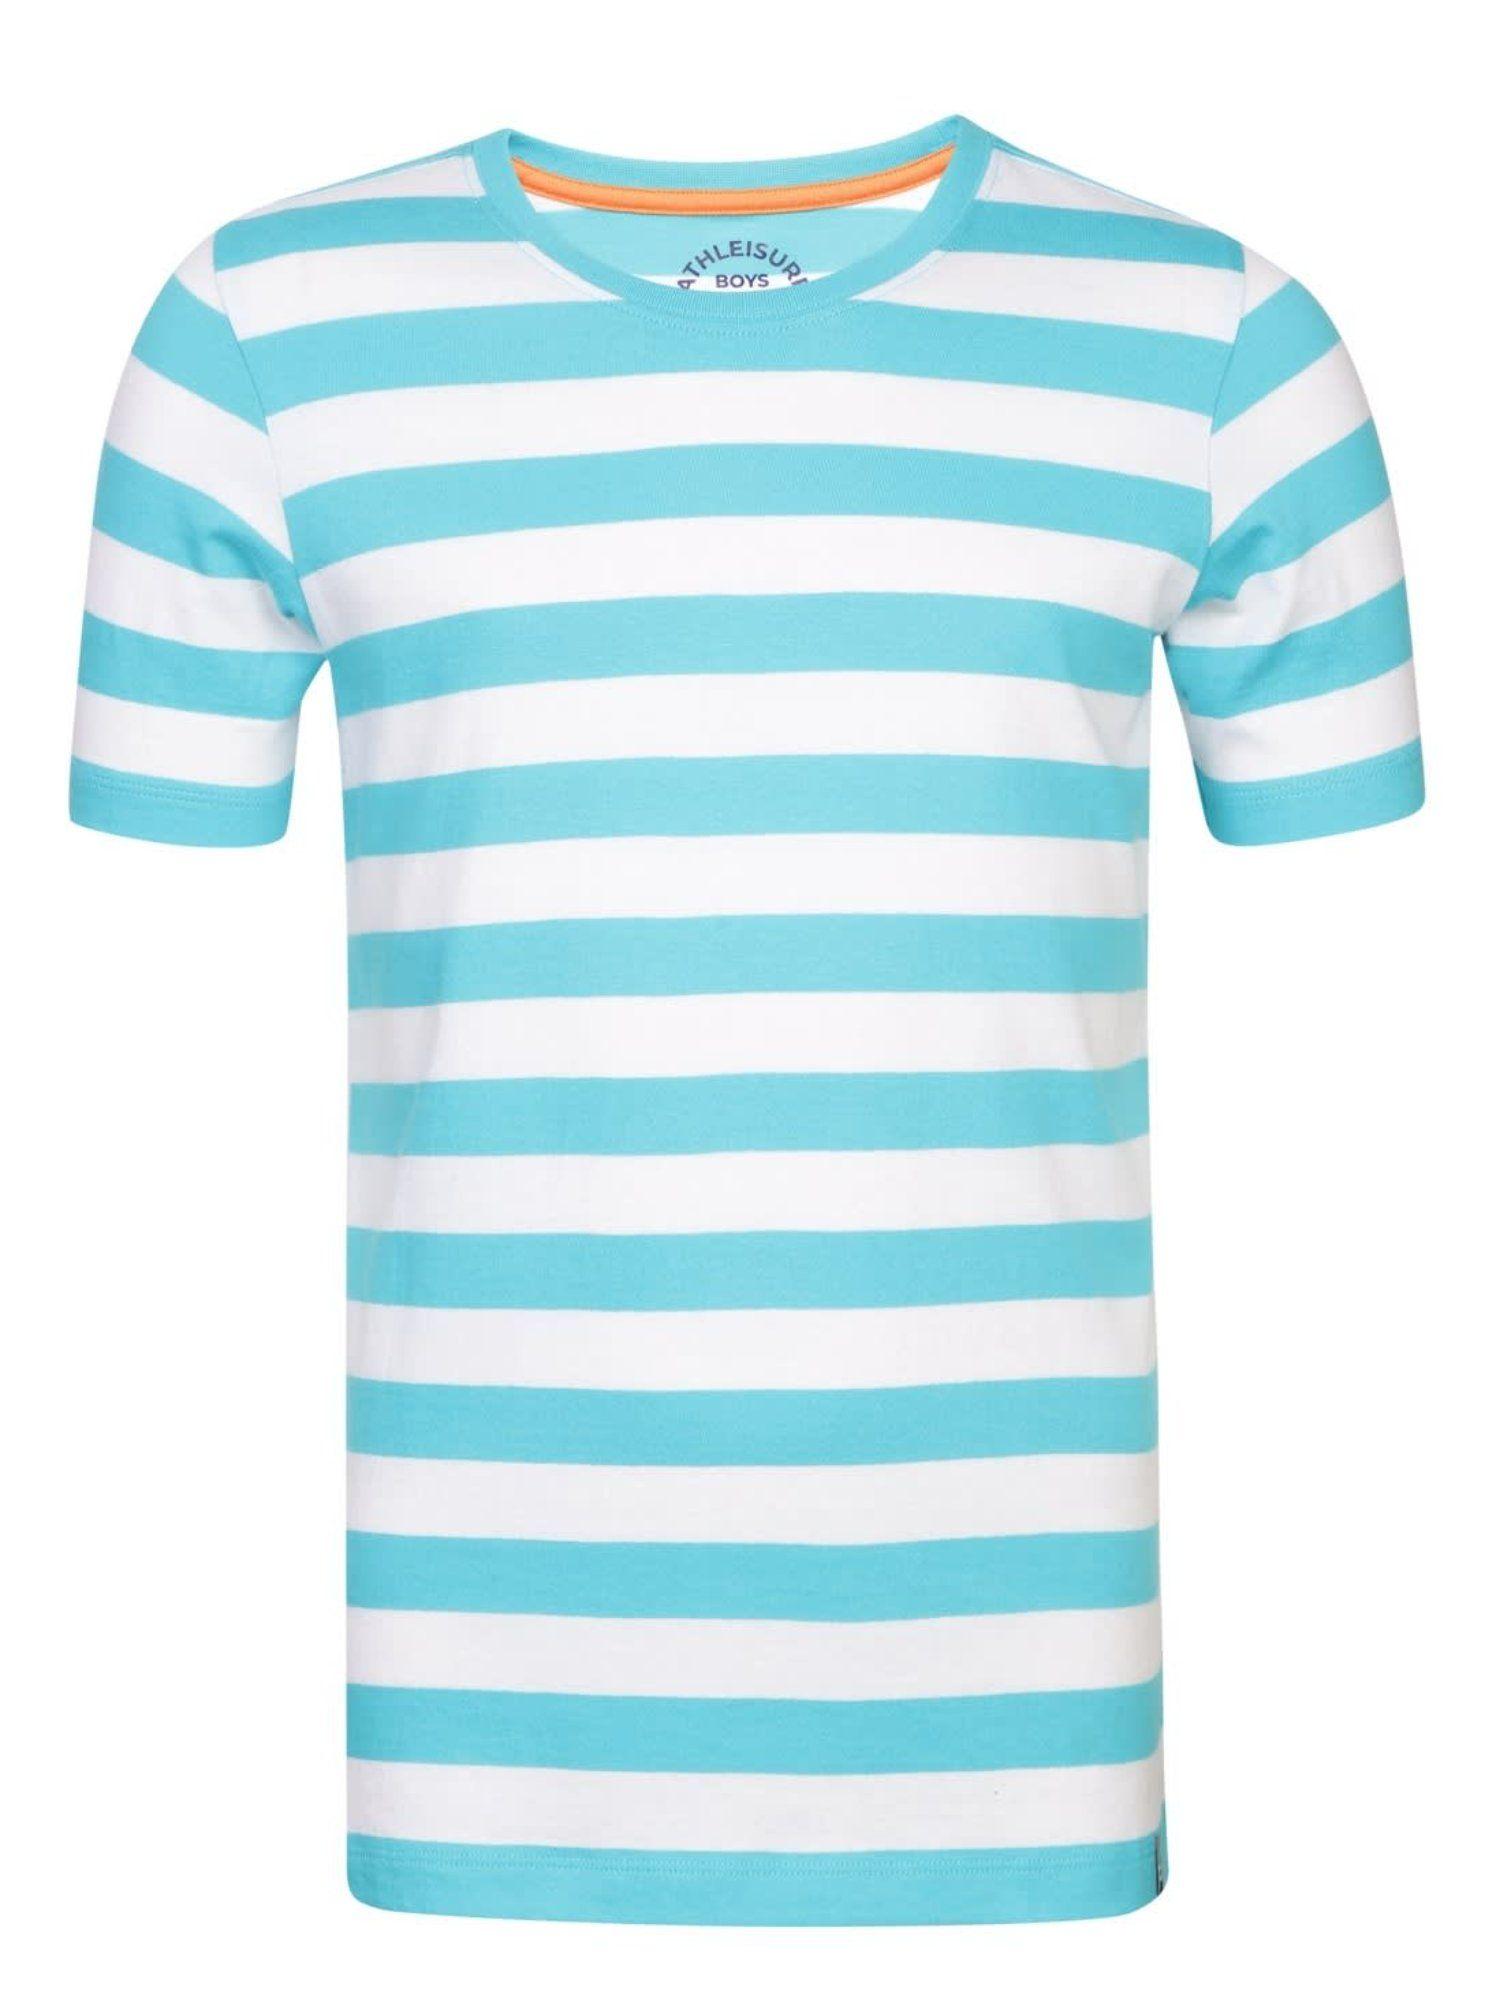 ab09 cotton round neck half sleeve t-shirt for boys blue